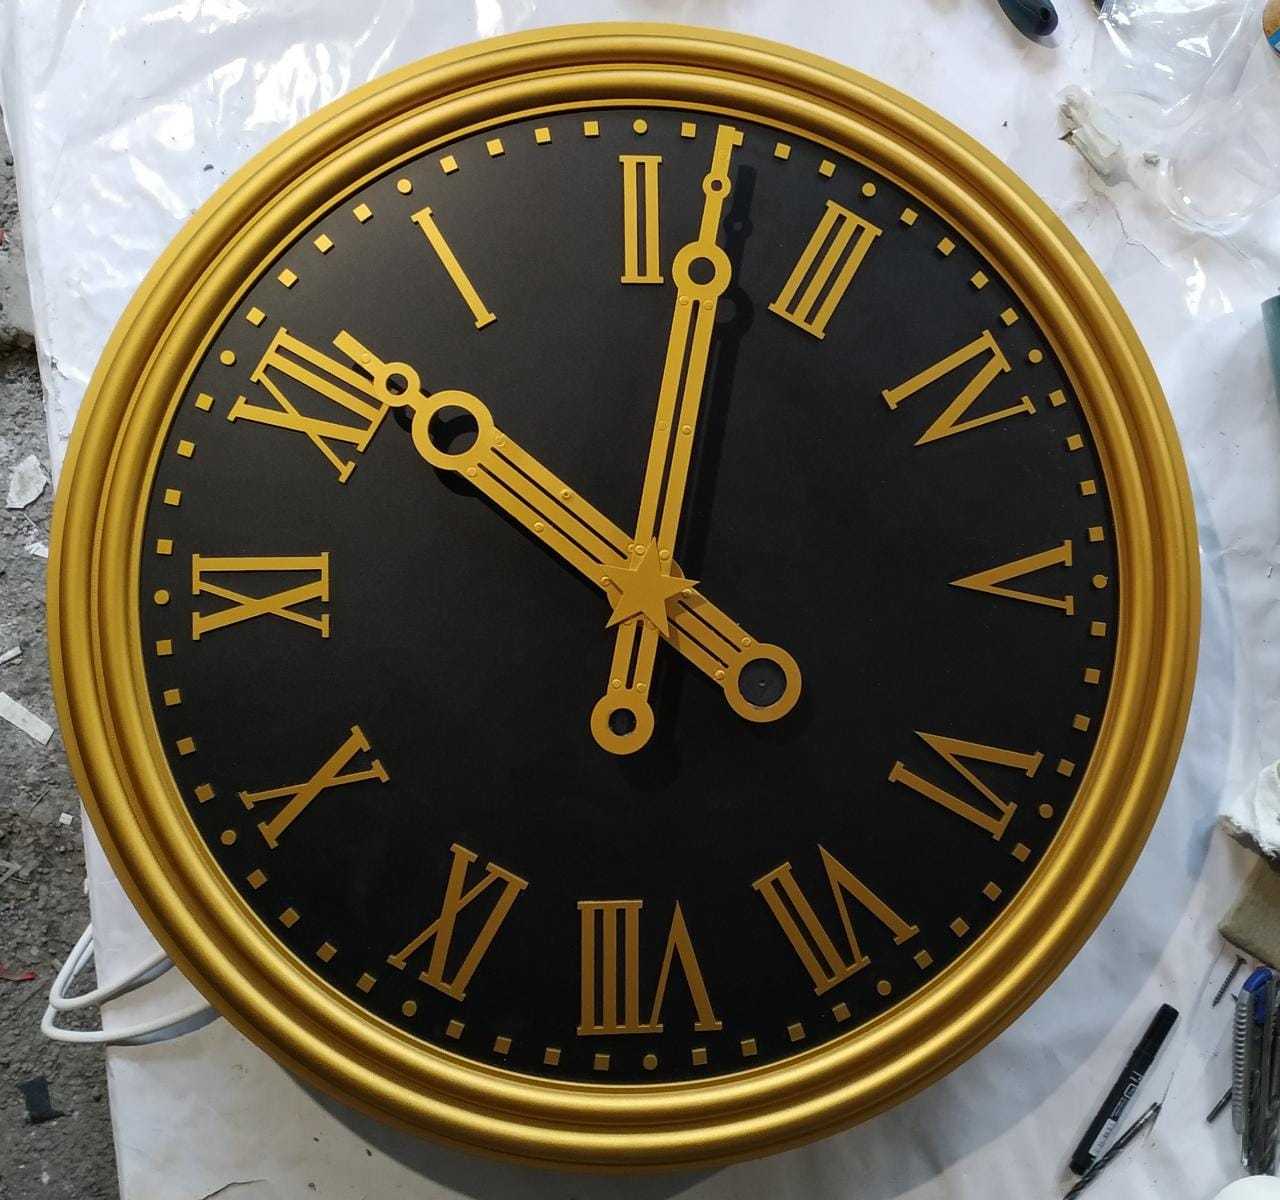 Часы 80 см. Фасадные часы. Фасадные часы 80 см диаметр. Башенные часы Минска. Часы фасадные уличные.